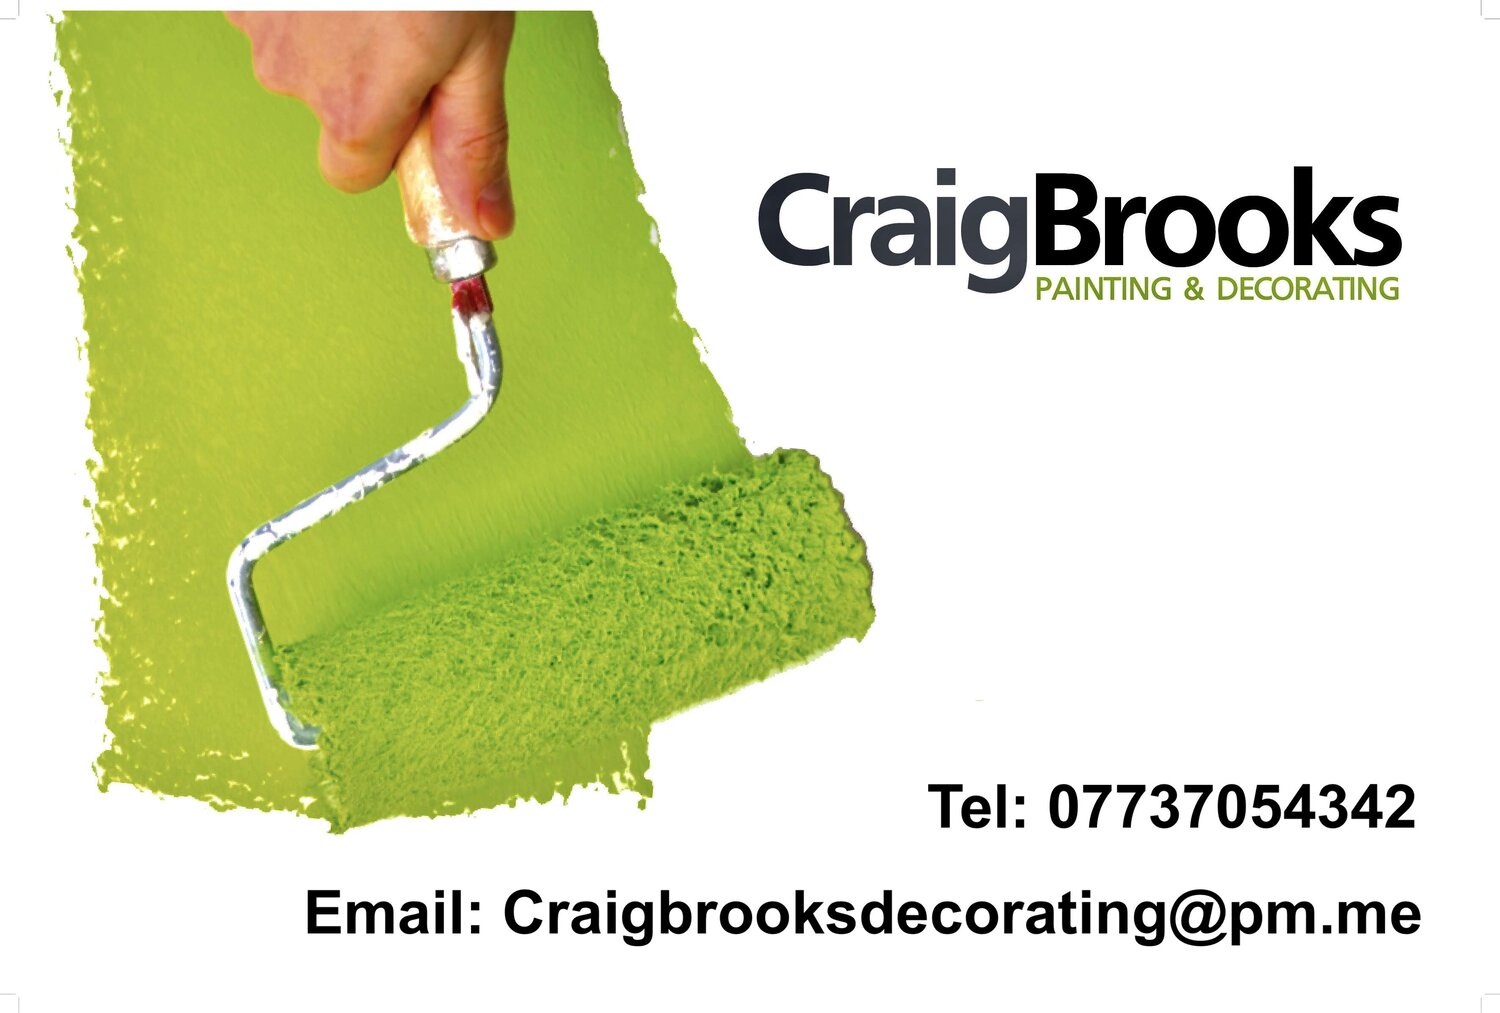 Craig Brooks painting & decorating in Devizes, Wiltshire